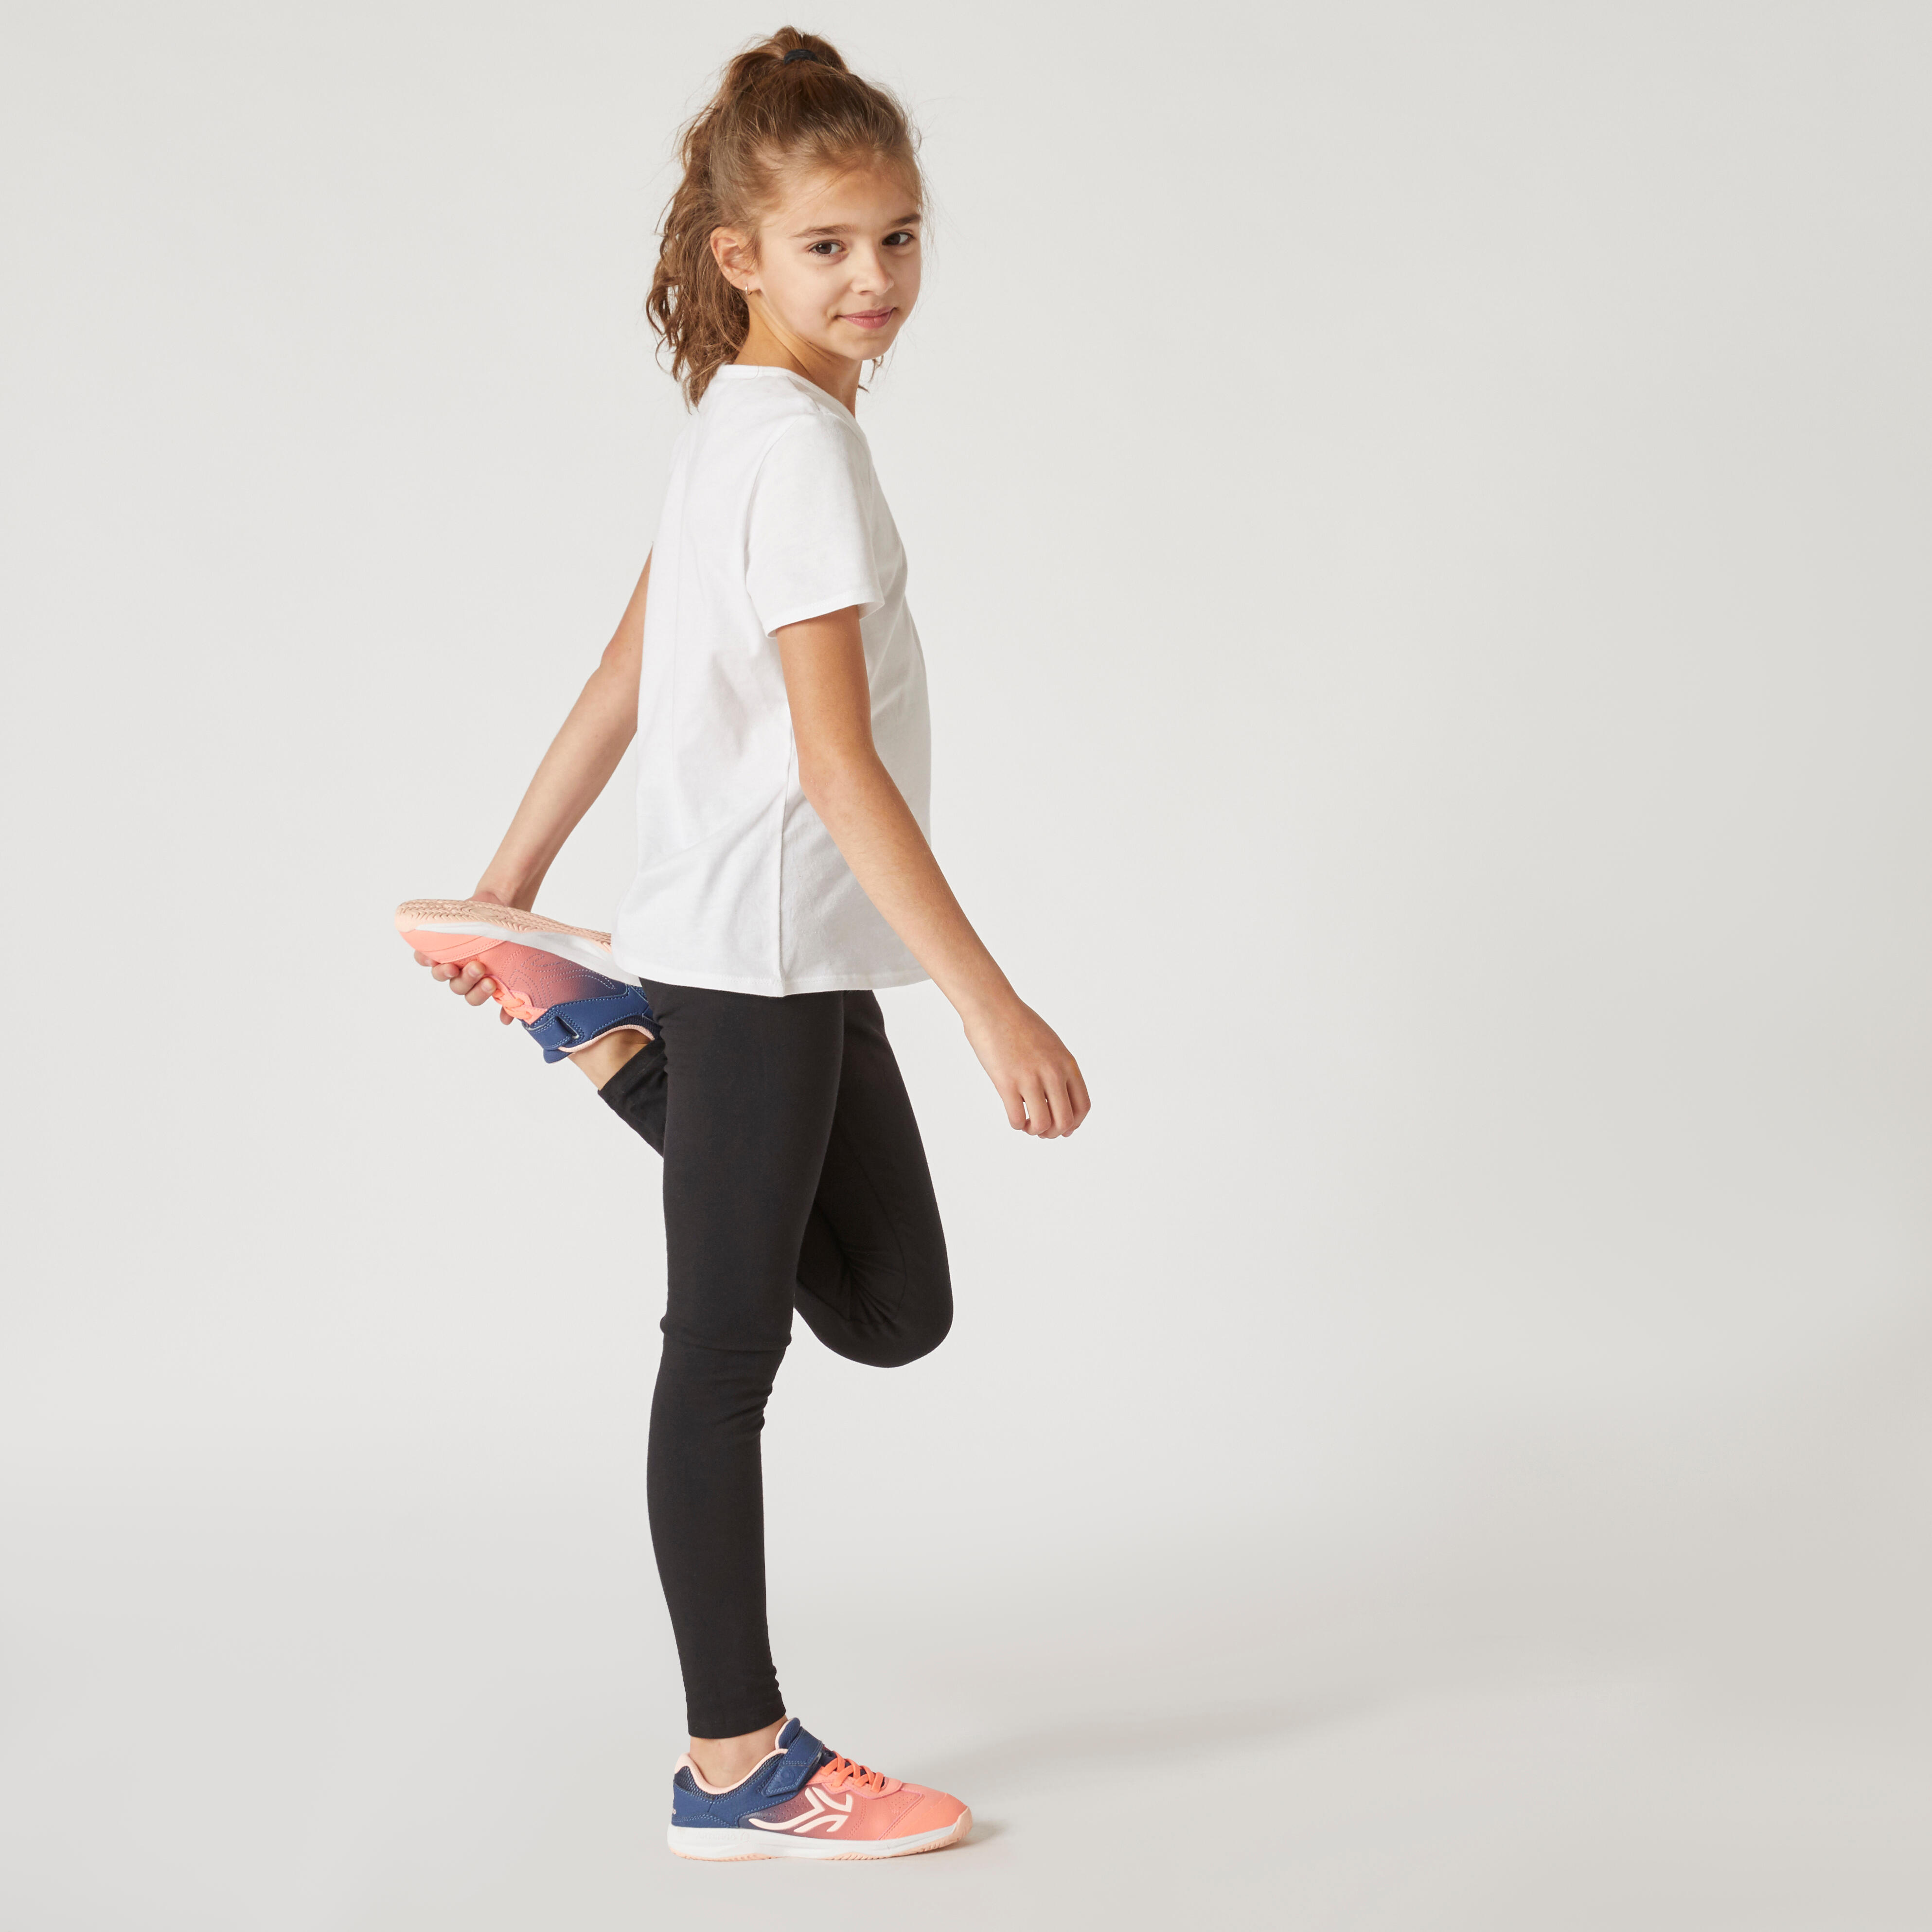 Girls Take Five size Medium Black athletic leggings with foot straps